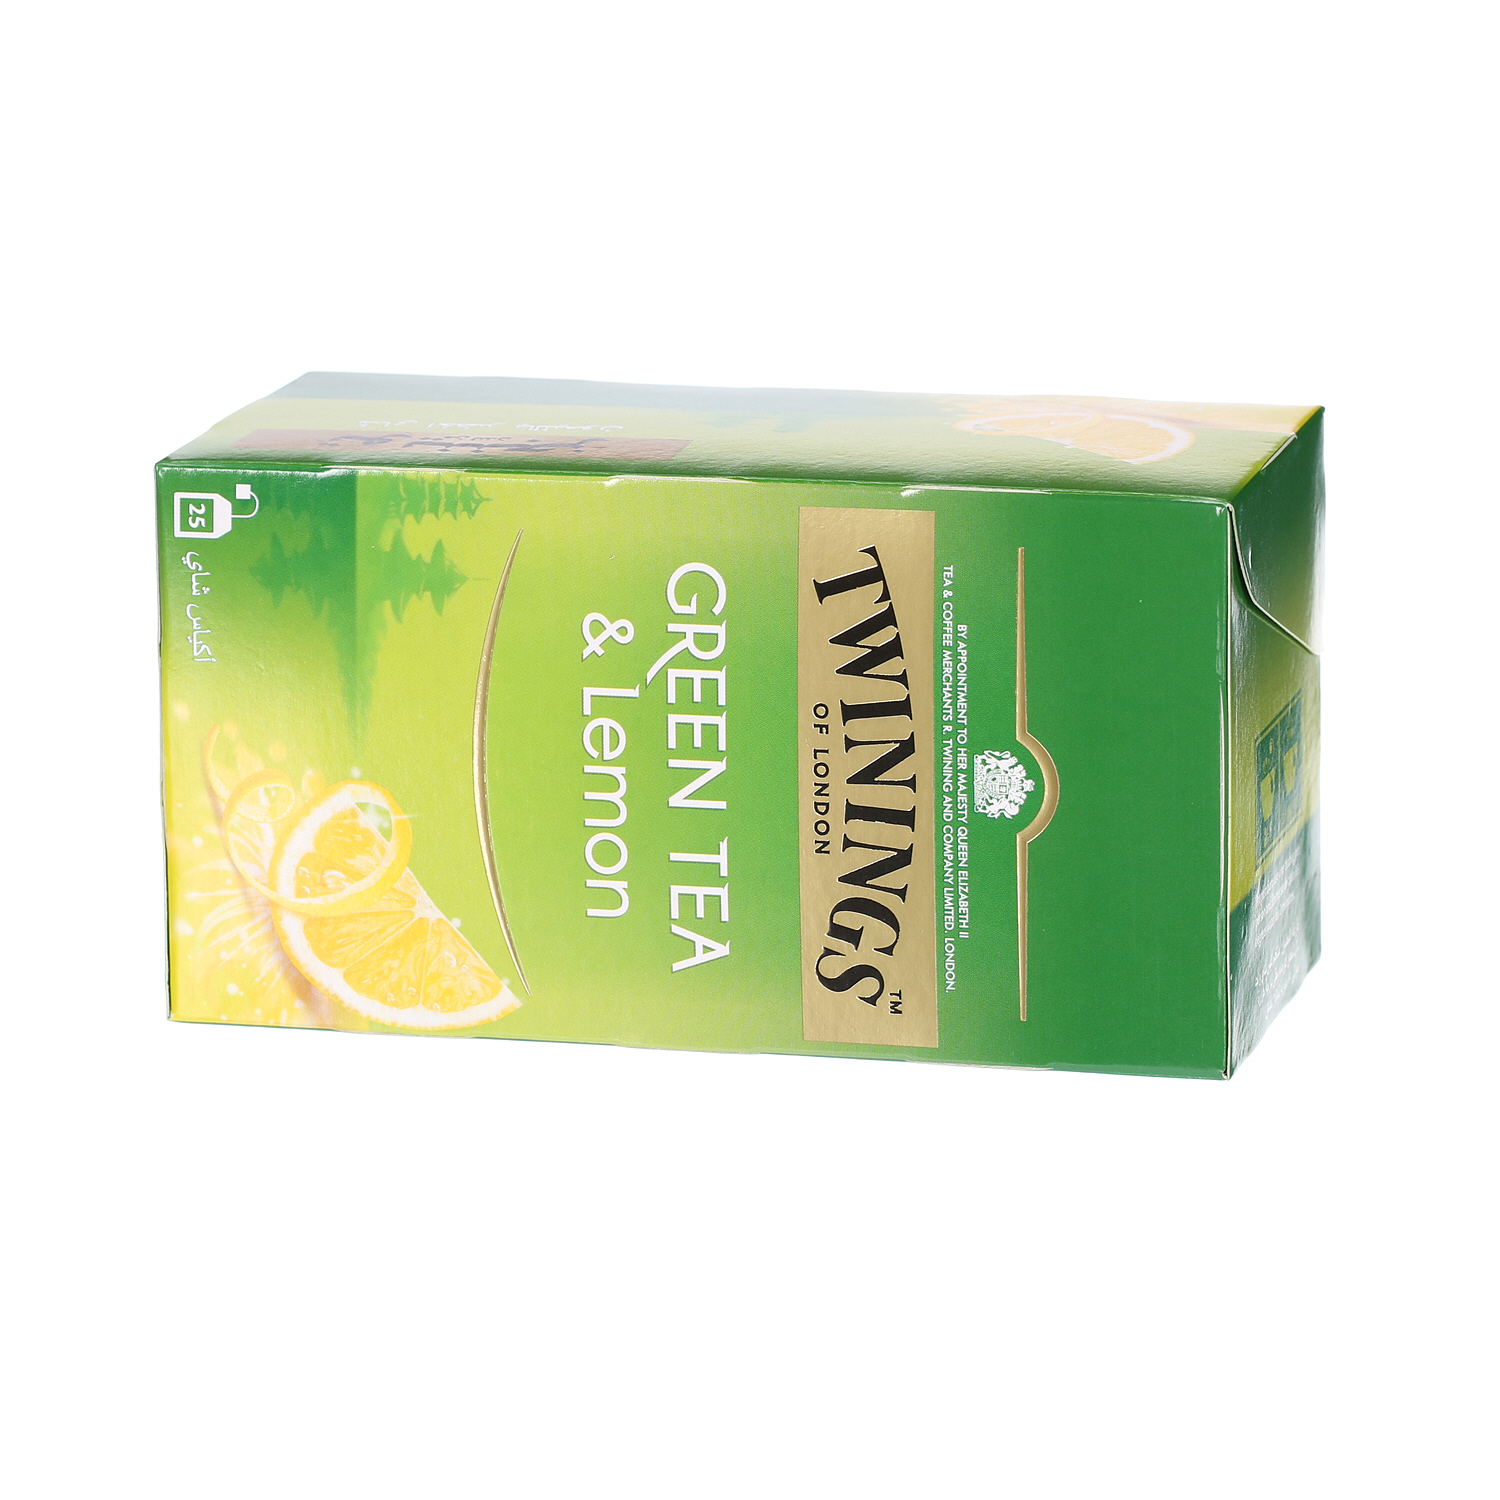 تويننجز شاي أخضر بالليمون 25 كيس